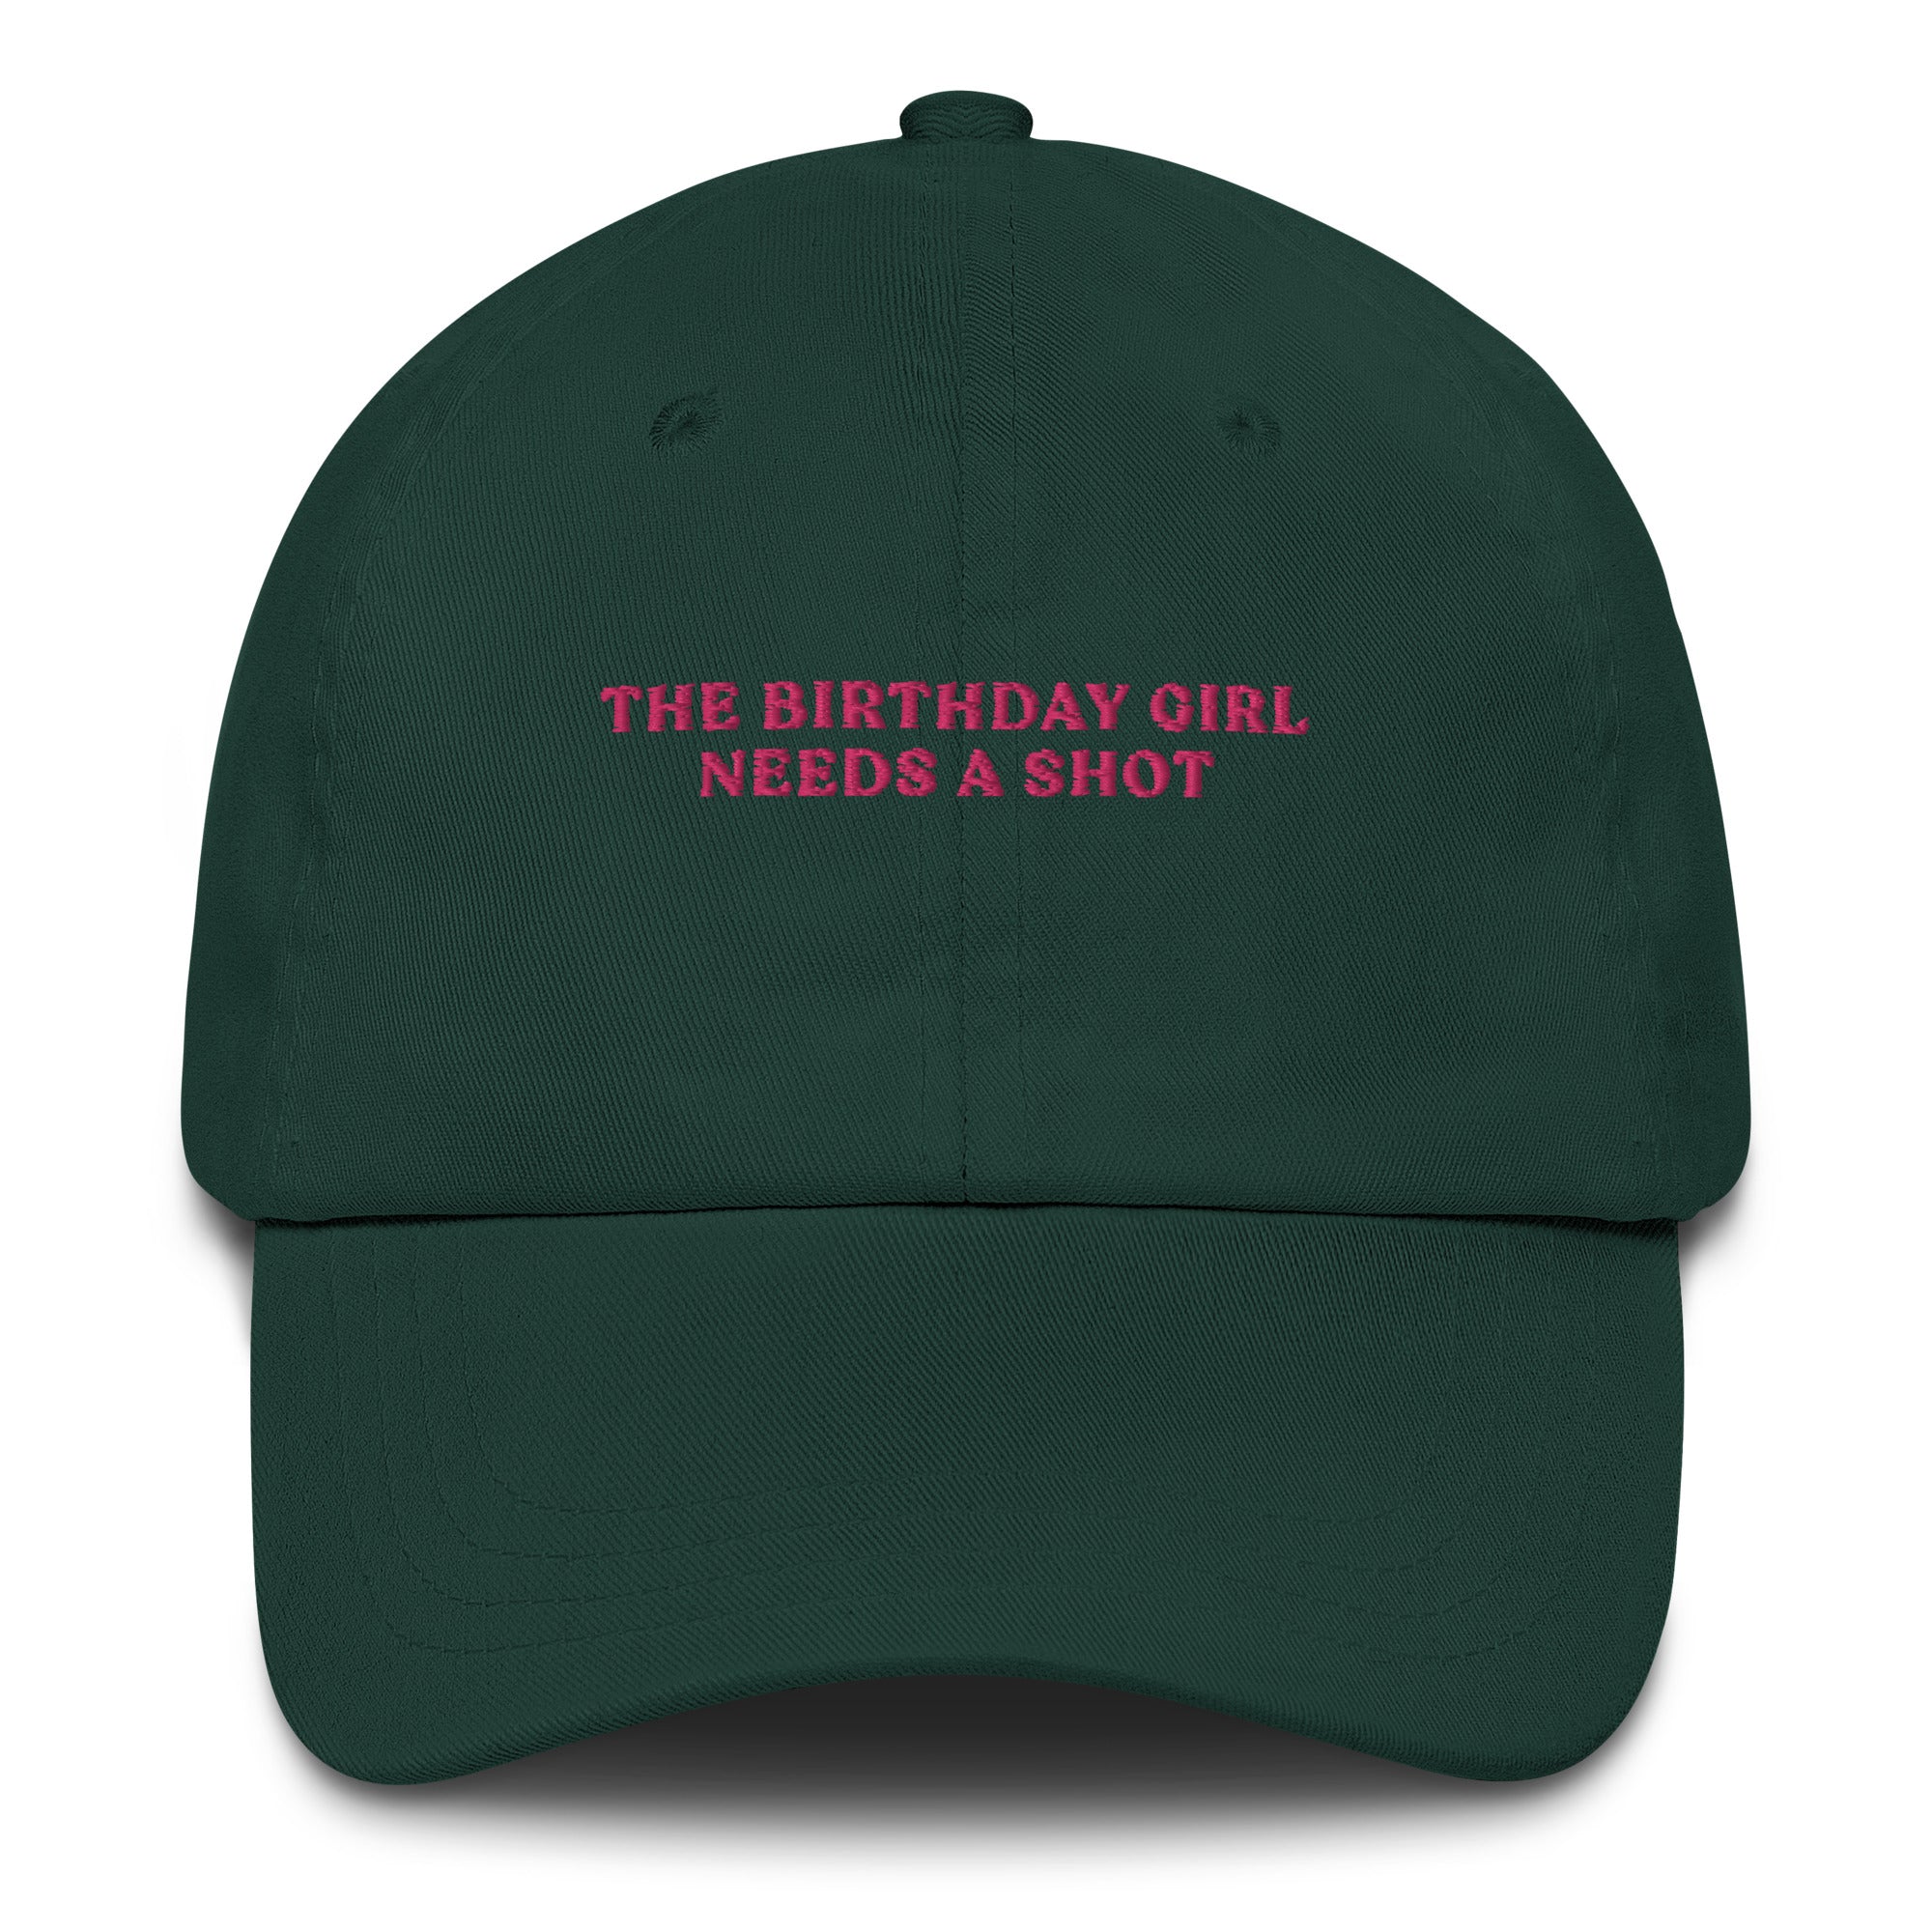 The Birthday Girl needs a Shot - Cap